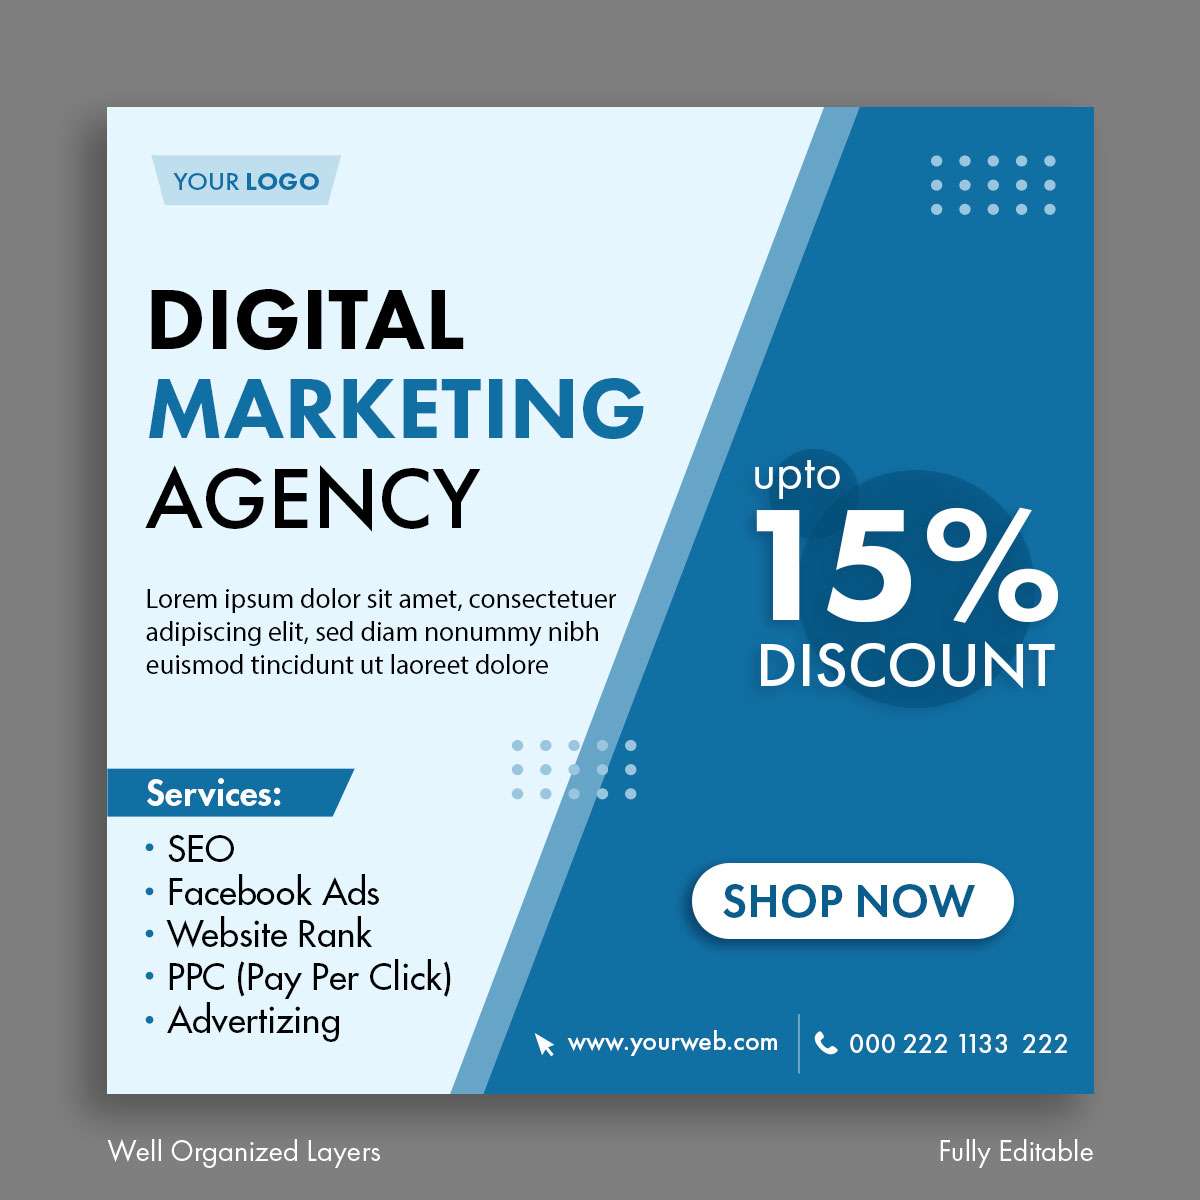 Free digital marketing agency social media post template design